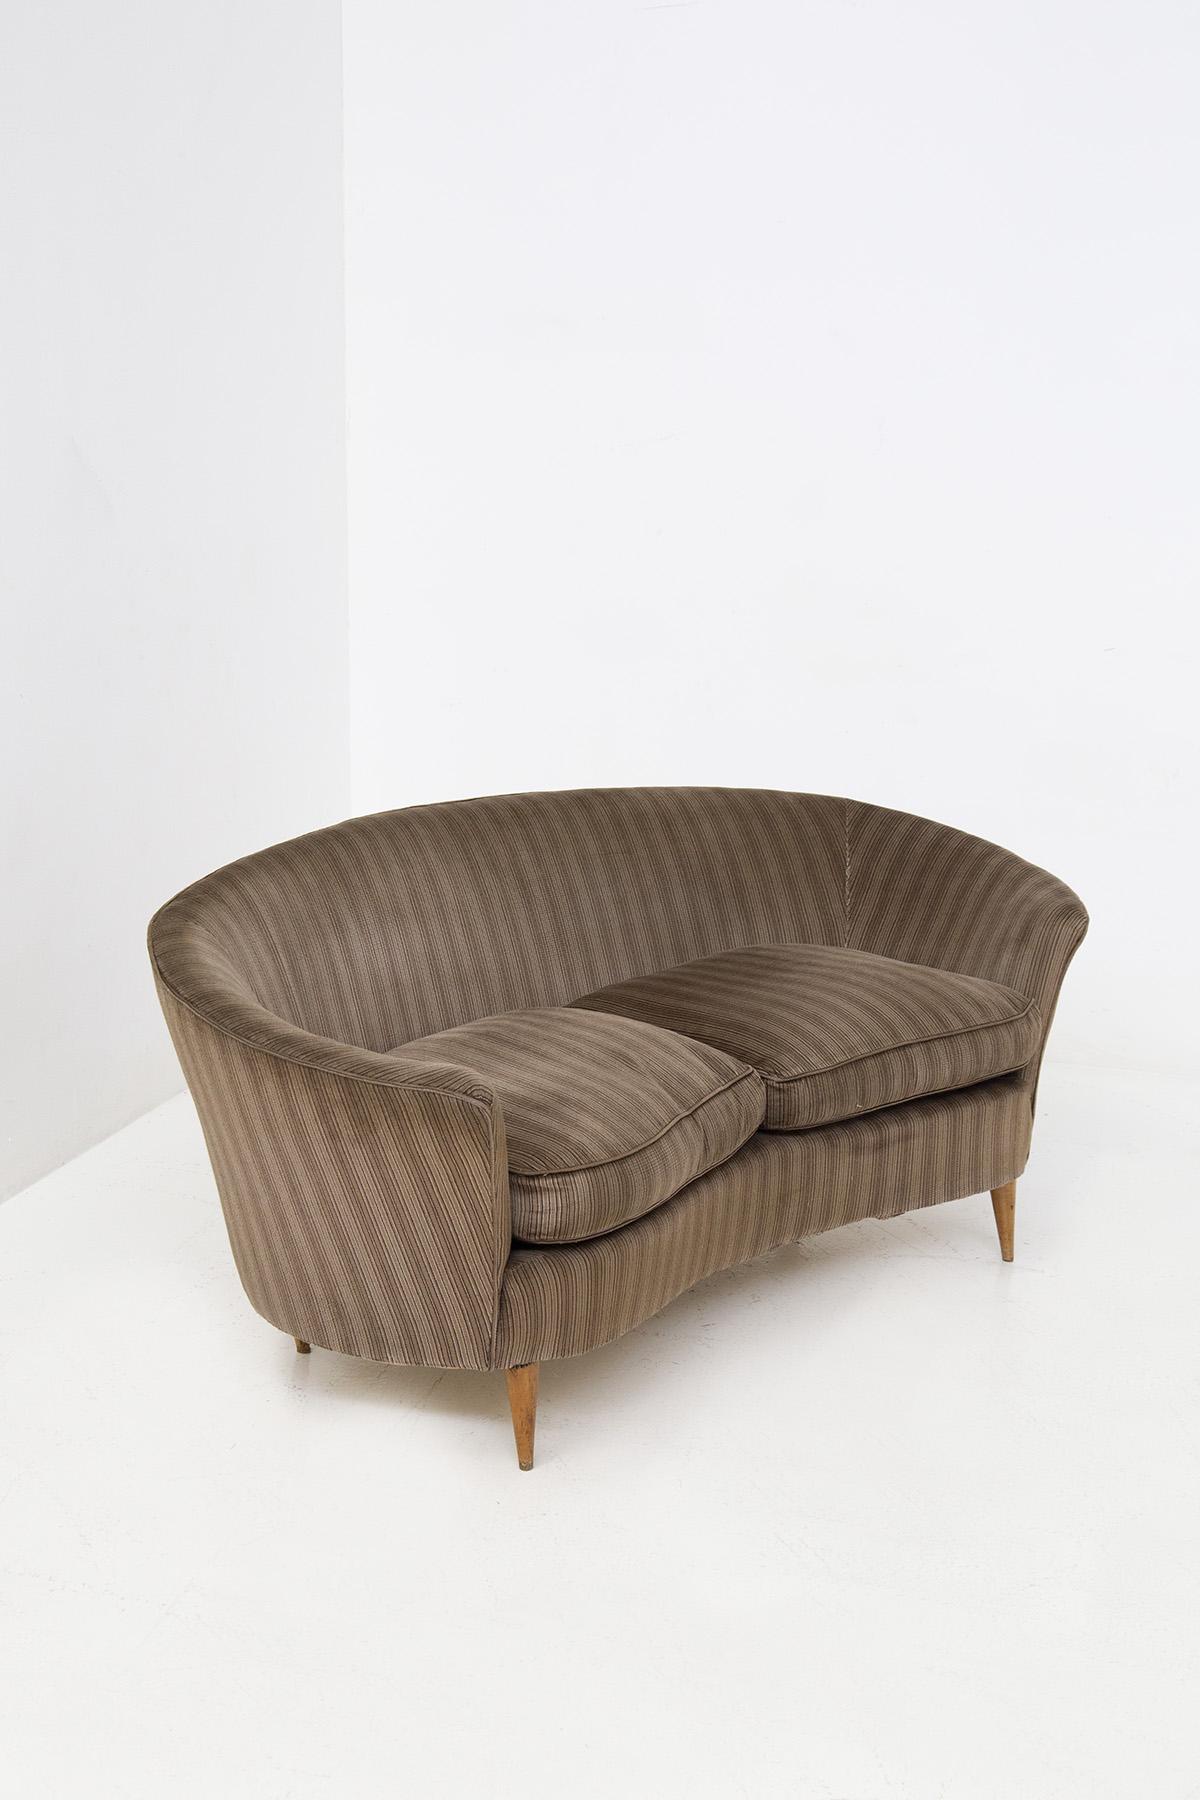 Italian Sofa attributed to Ico Parisi in original fabric In Good Condition For Sale In Milano, IT